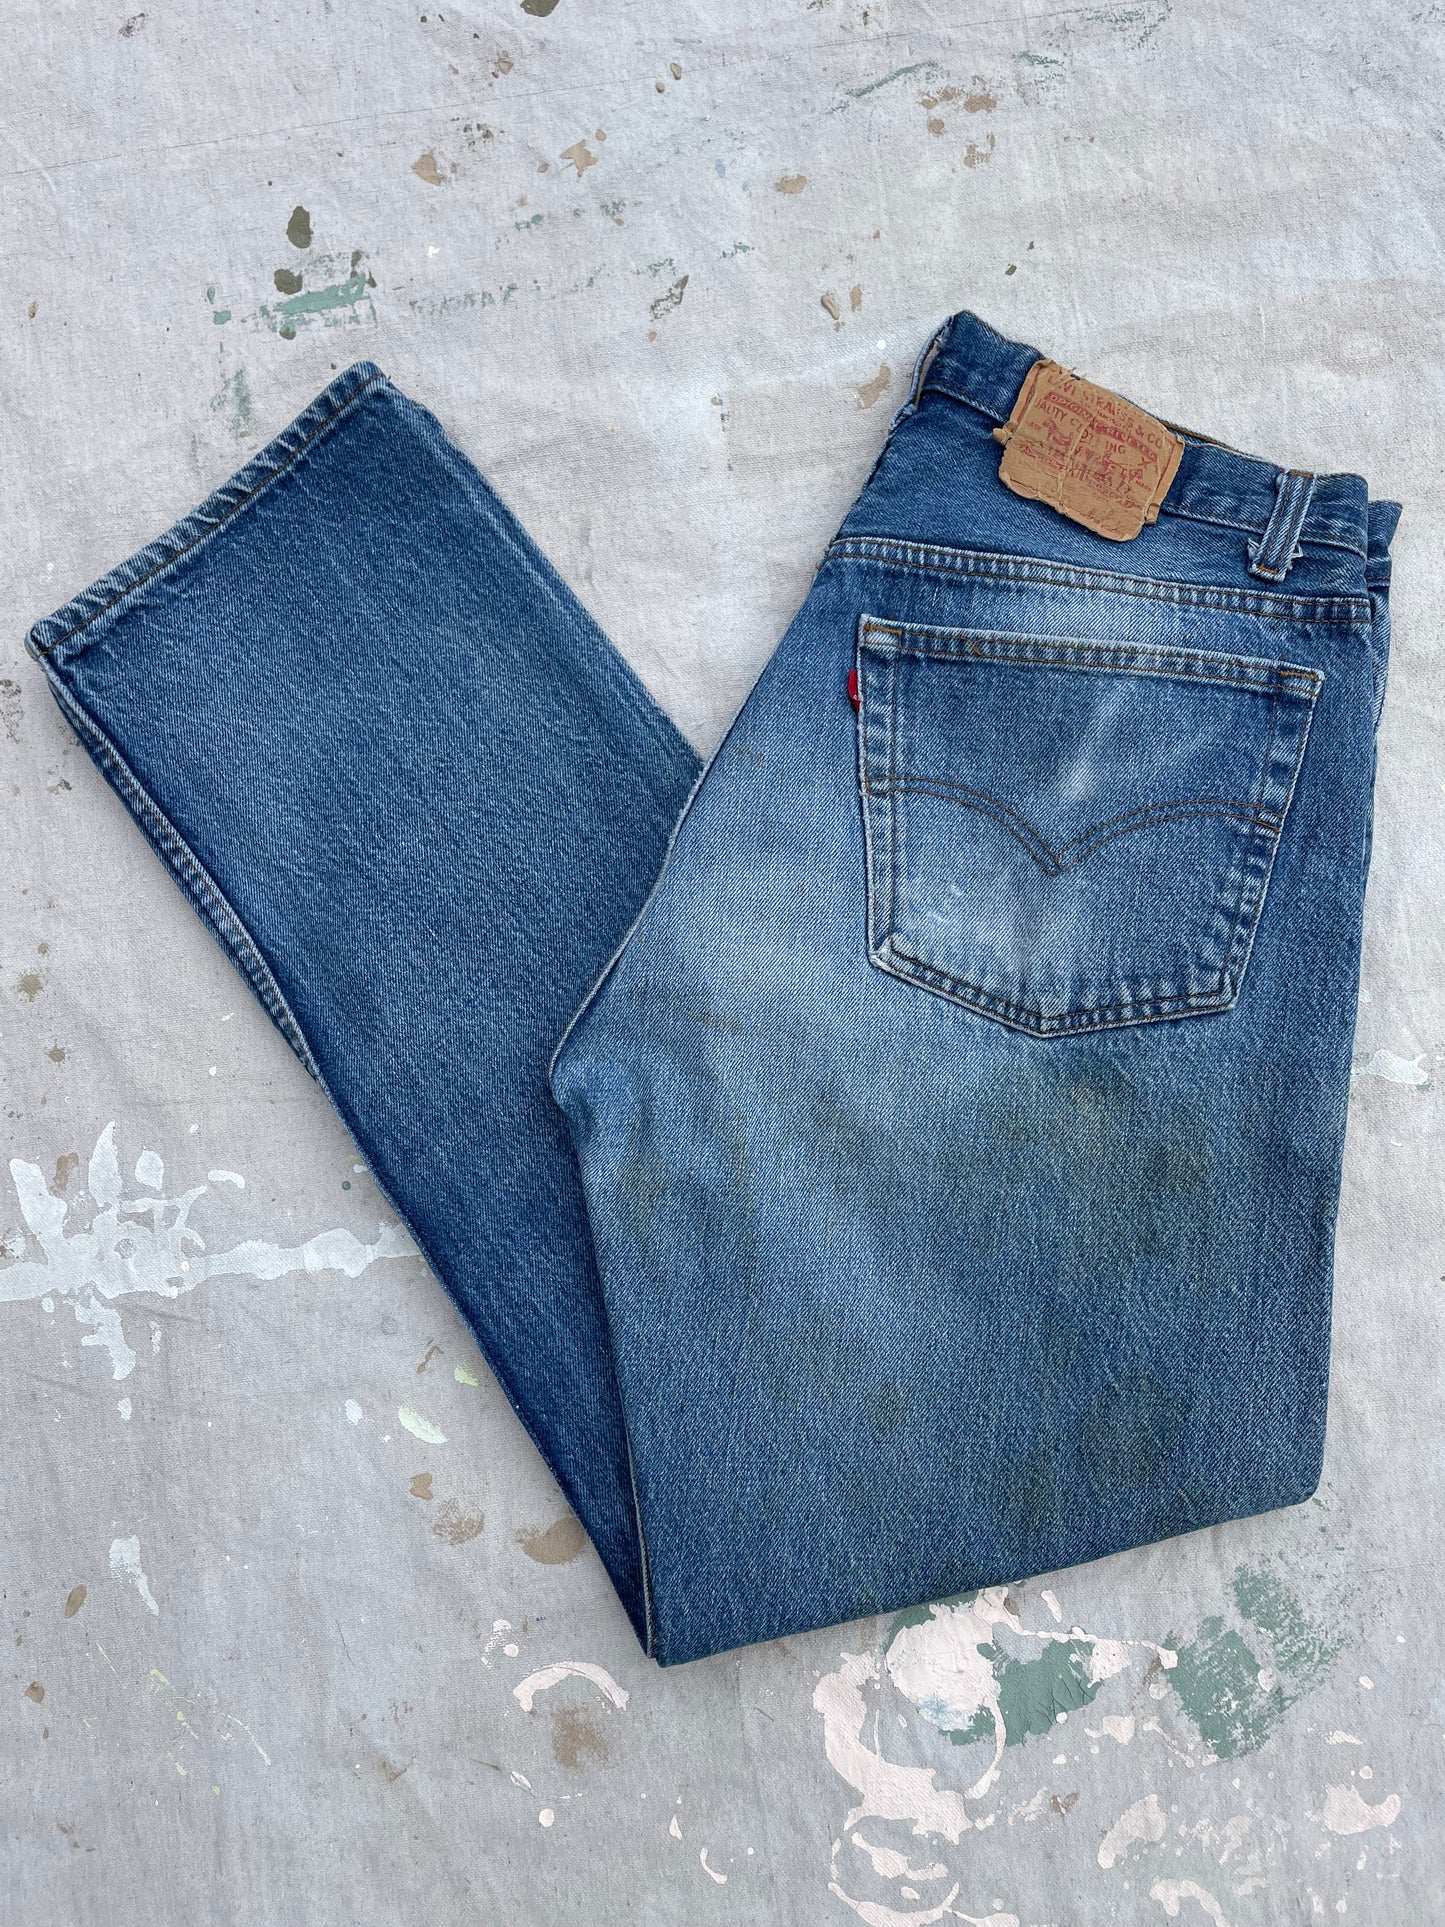 80s Levi’s 501 Jeans